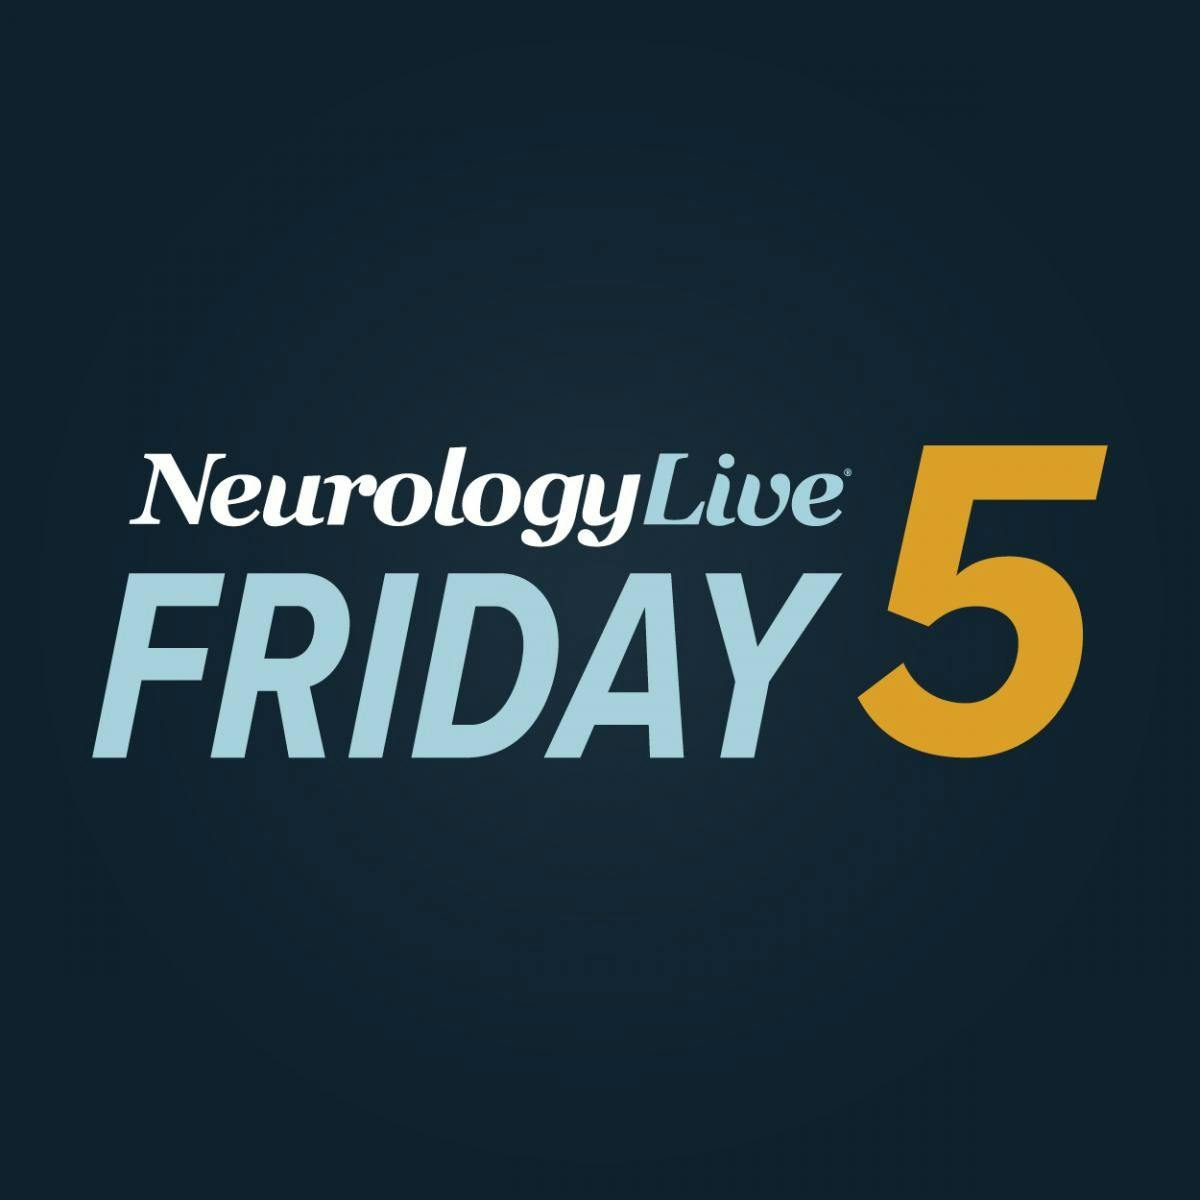 NeurologyLive Friday 5 — March 12, 2021